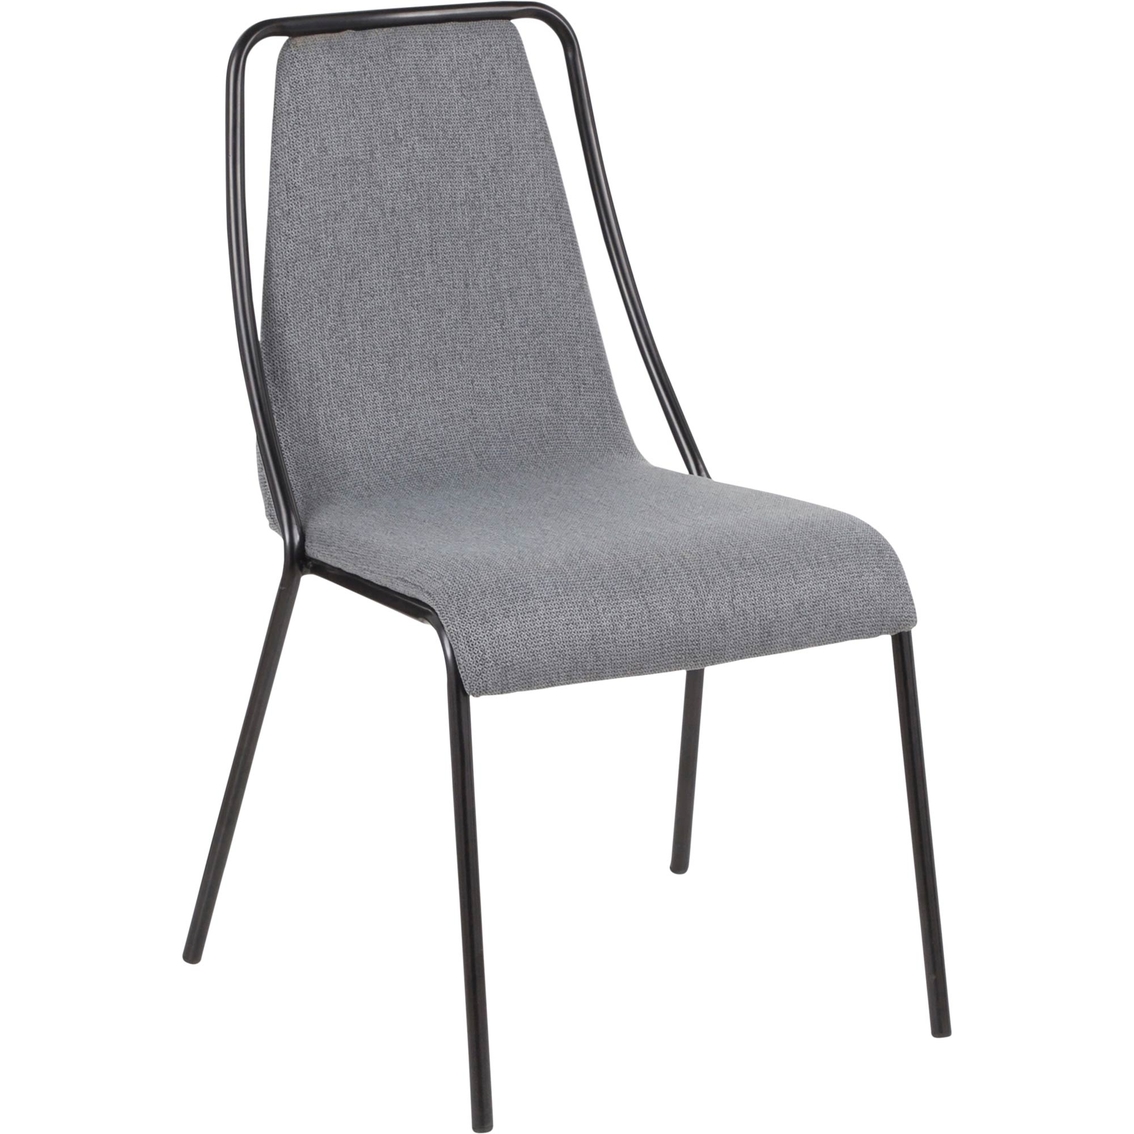 LumiSource Katana Contemporary Chair 4 pk. - Image 2 of 7